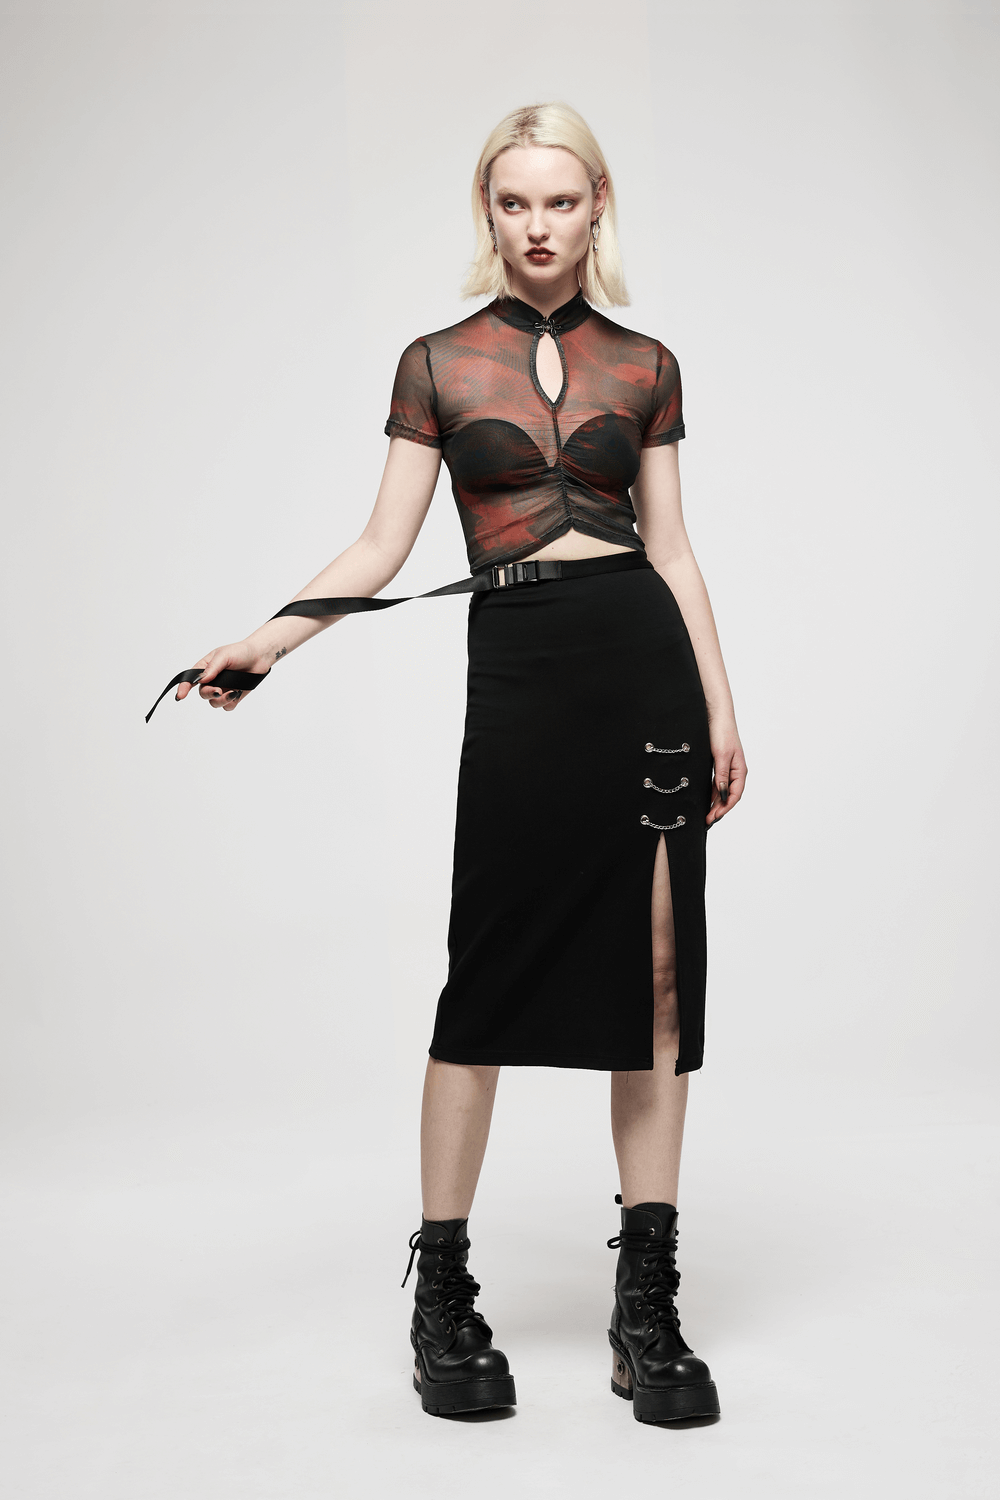 Punk Rave Slit Adjustable Midi Skirt with Chains